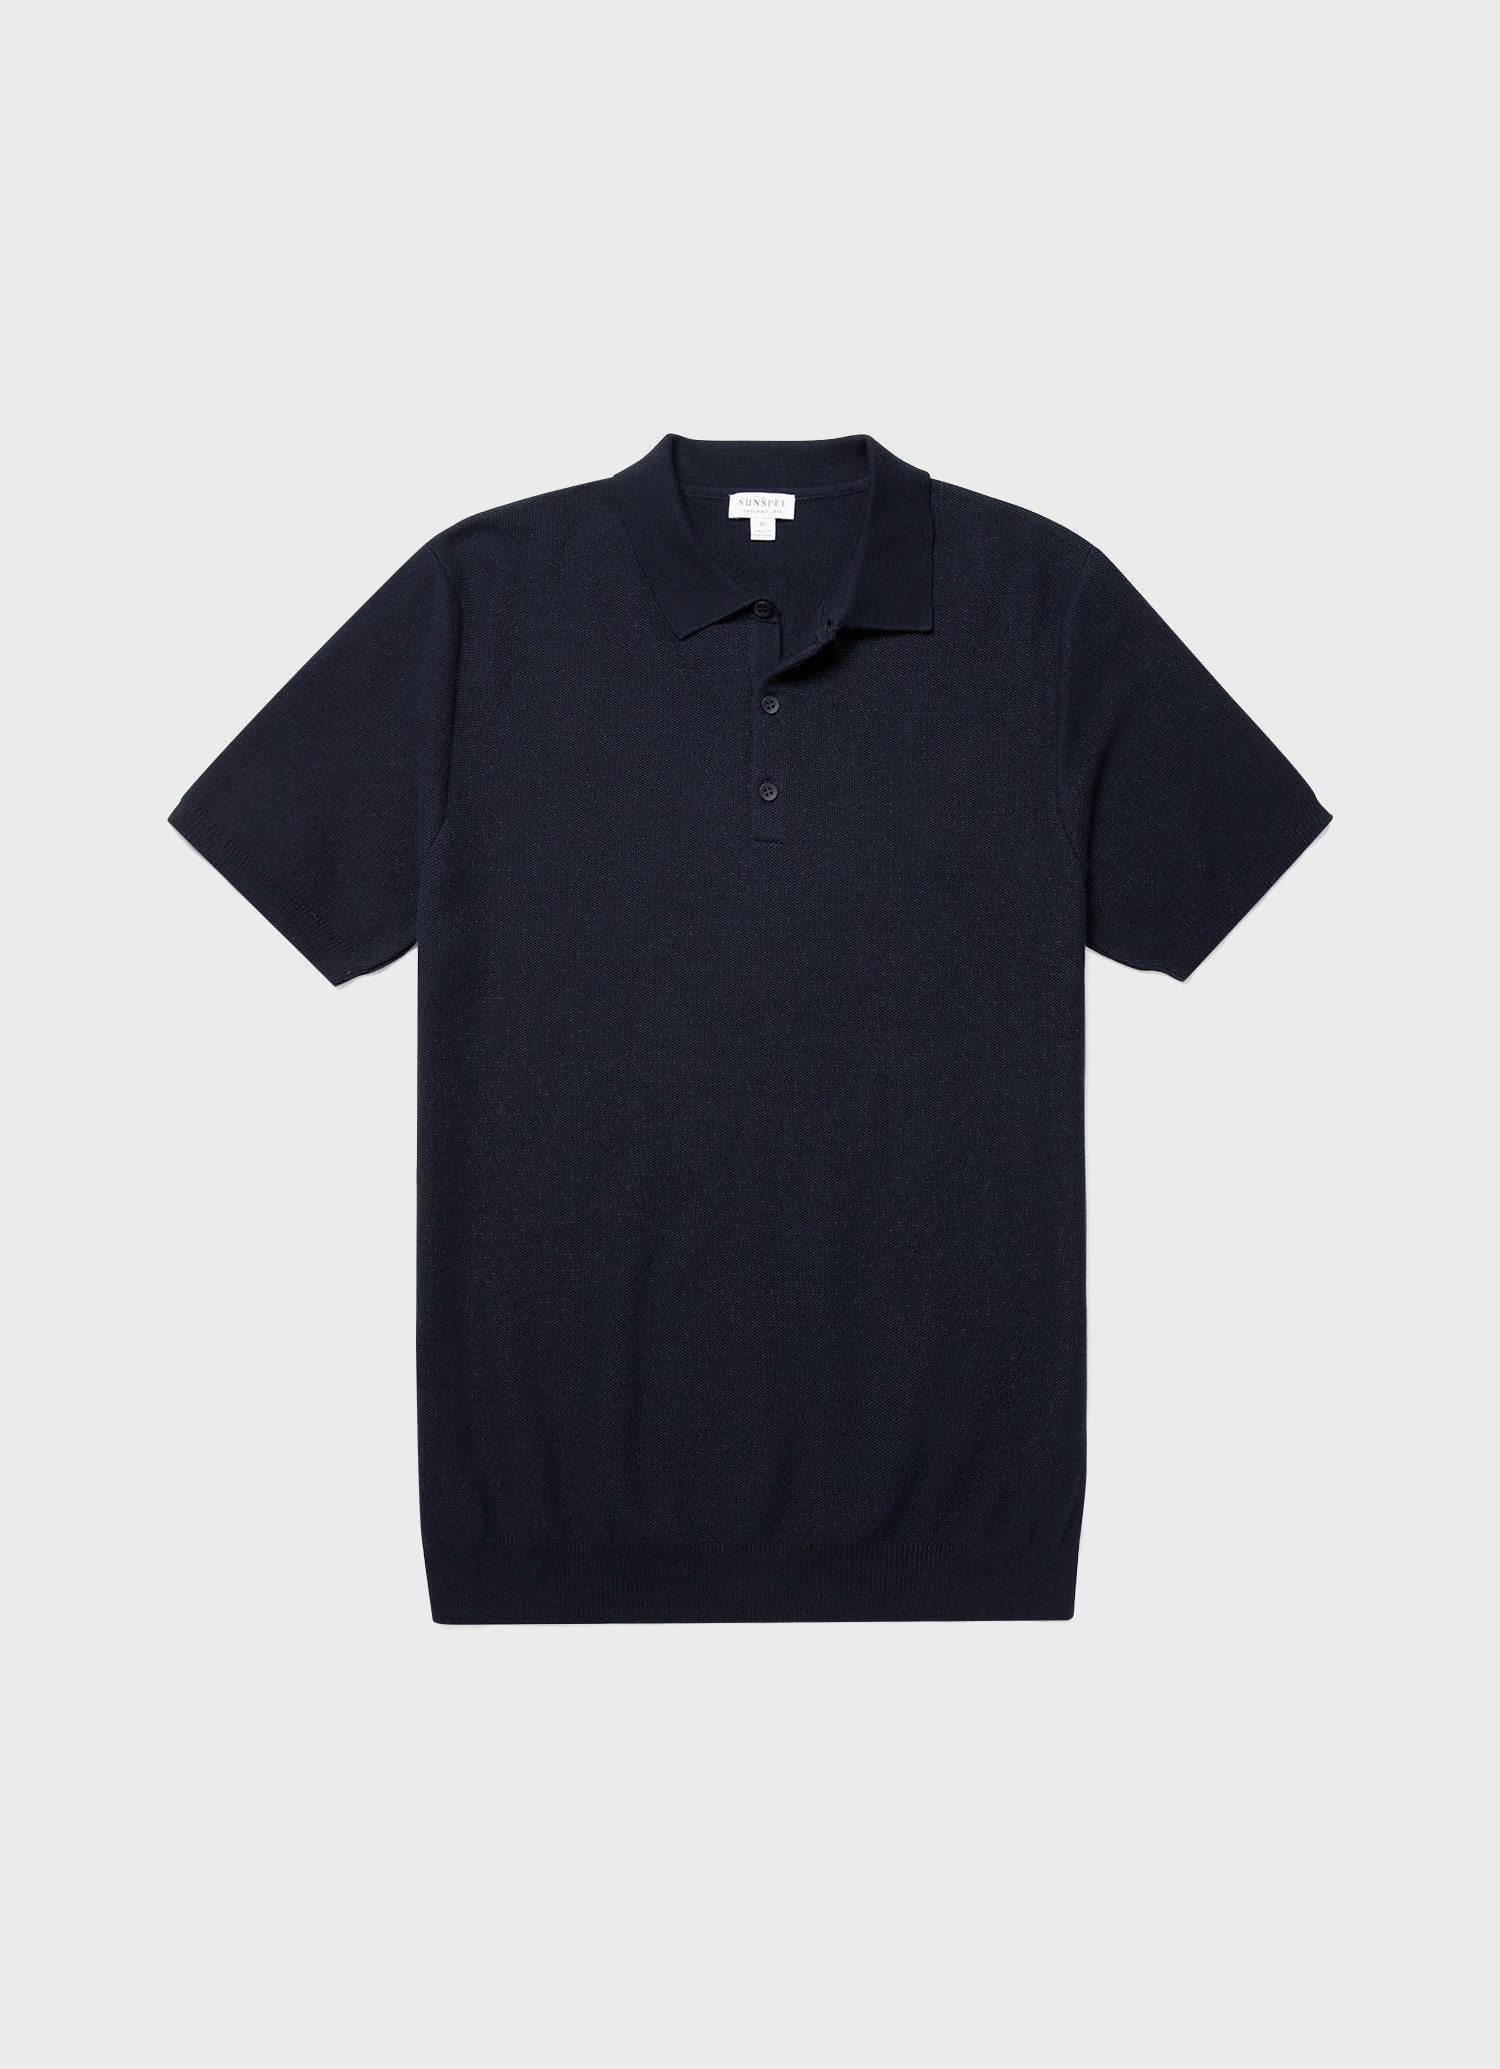 Men's Knit Polo Shirt in Navy | Sunspel